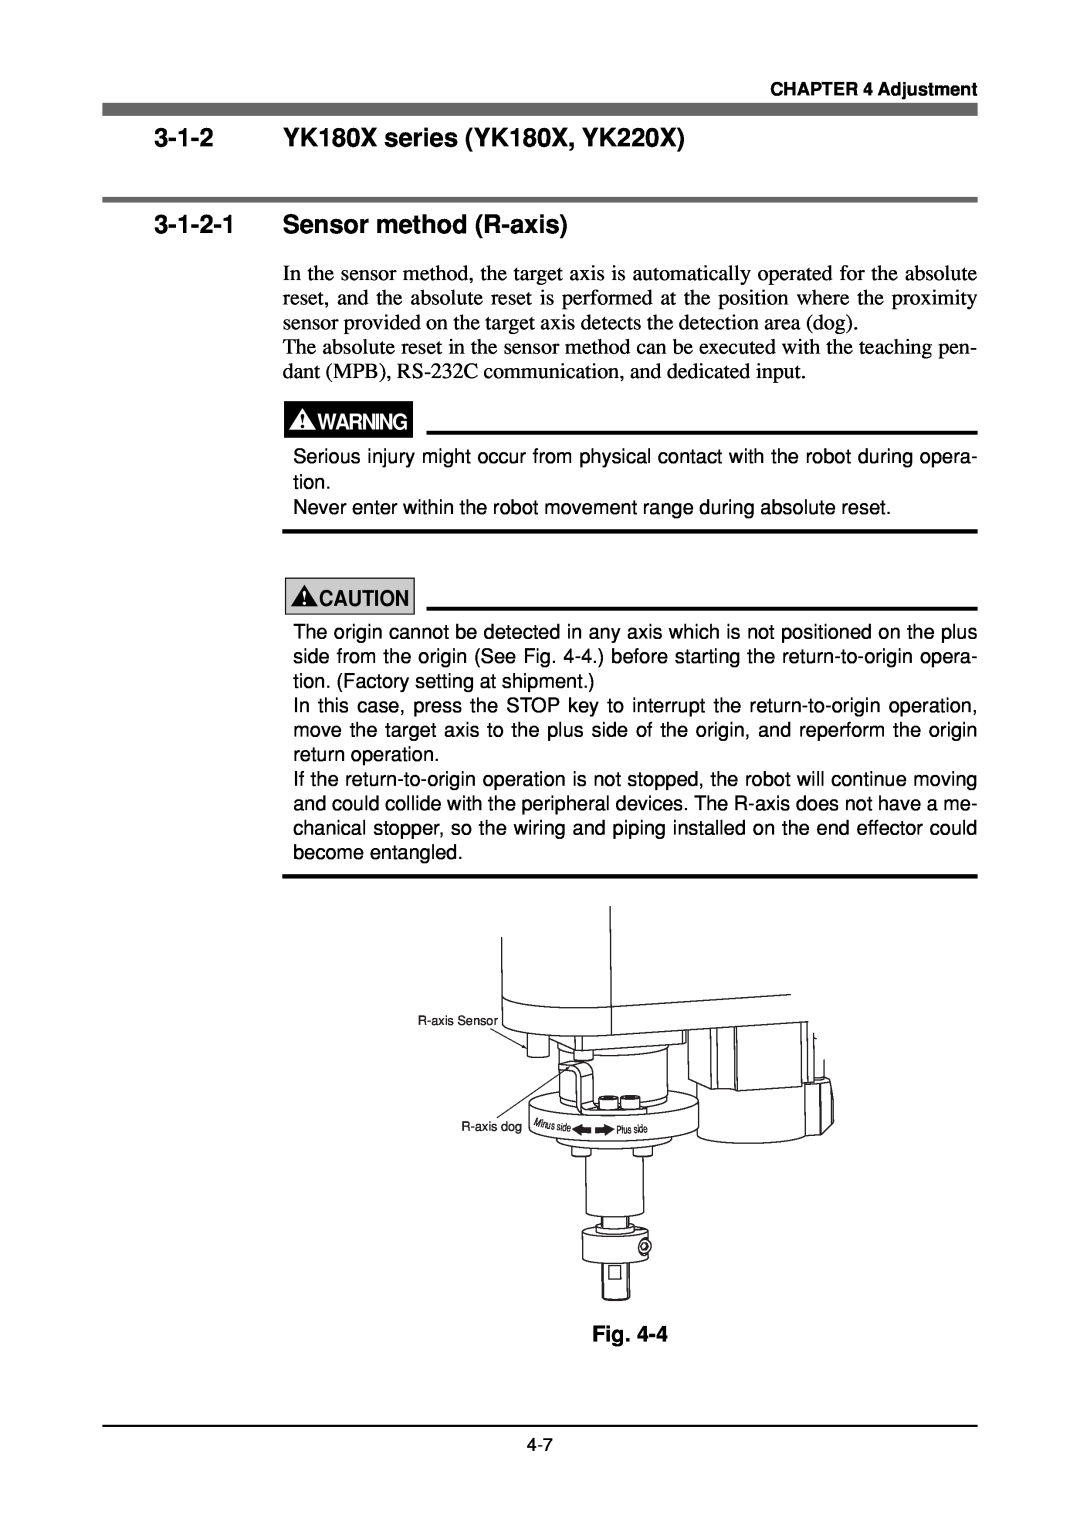 Yamaha YK120X owner manual 3-1-2 YK180X series YK180X, YK220X 3-1-2-1 Sensor method R-axis, side 